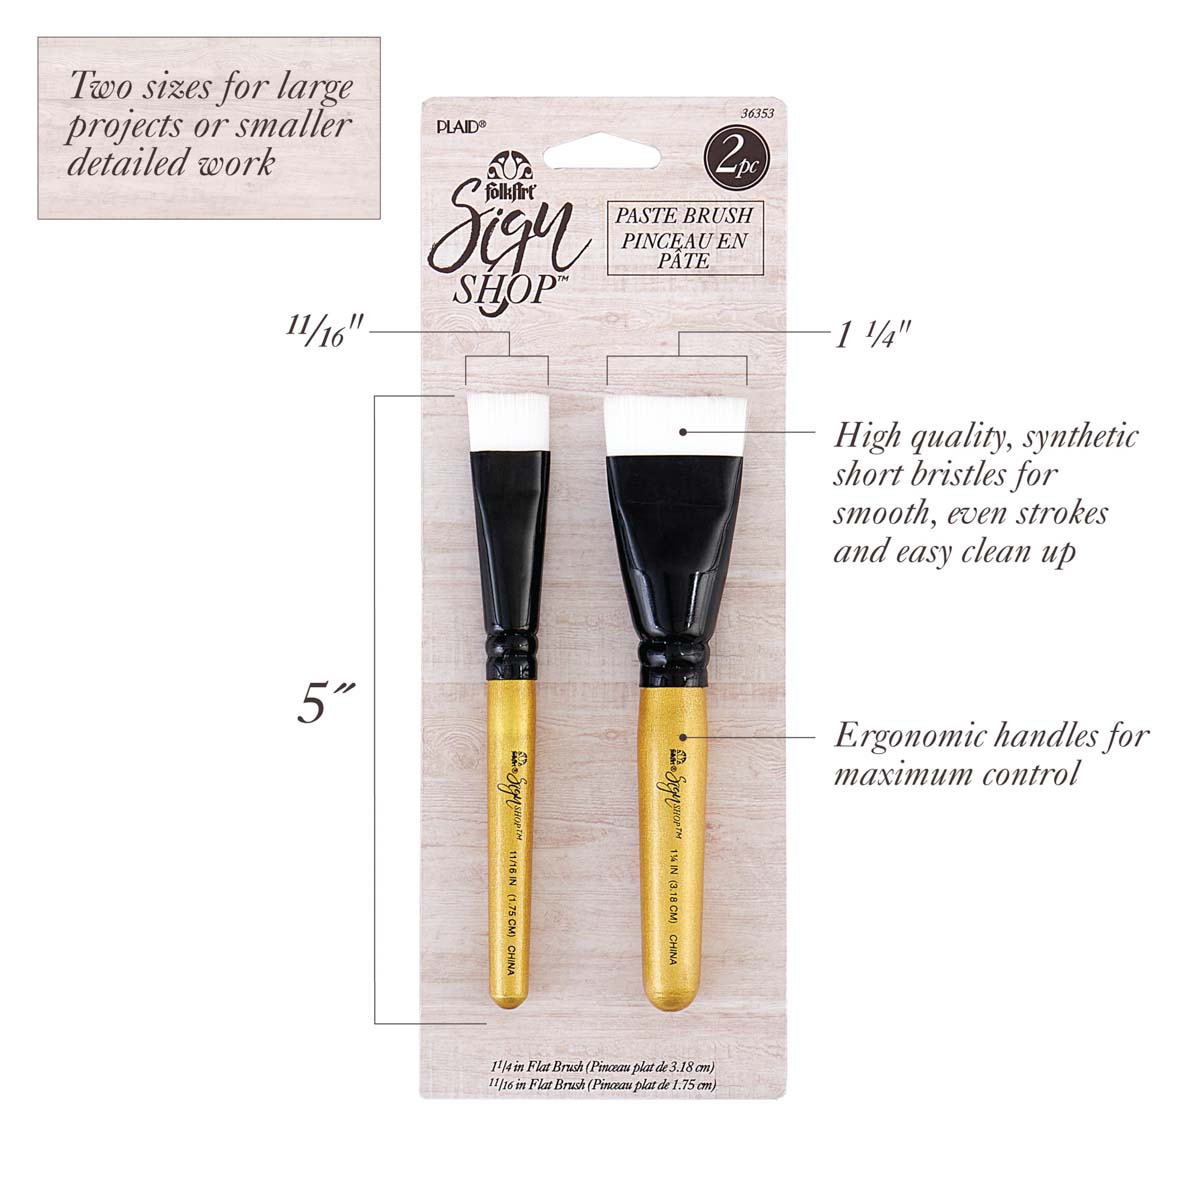 FolkArt ® Sign Shop™ Brush Set - Stencil Paste Brush Set, 2 pc. - 36353